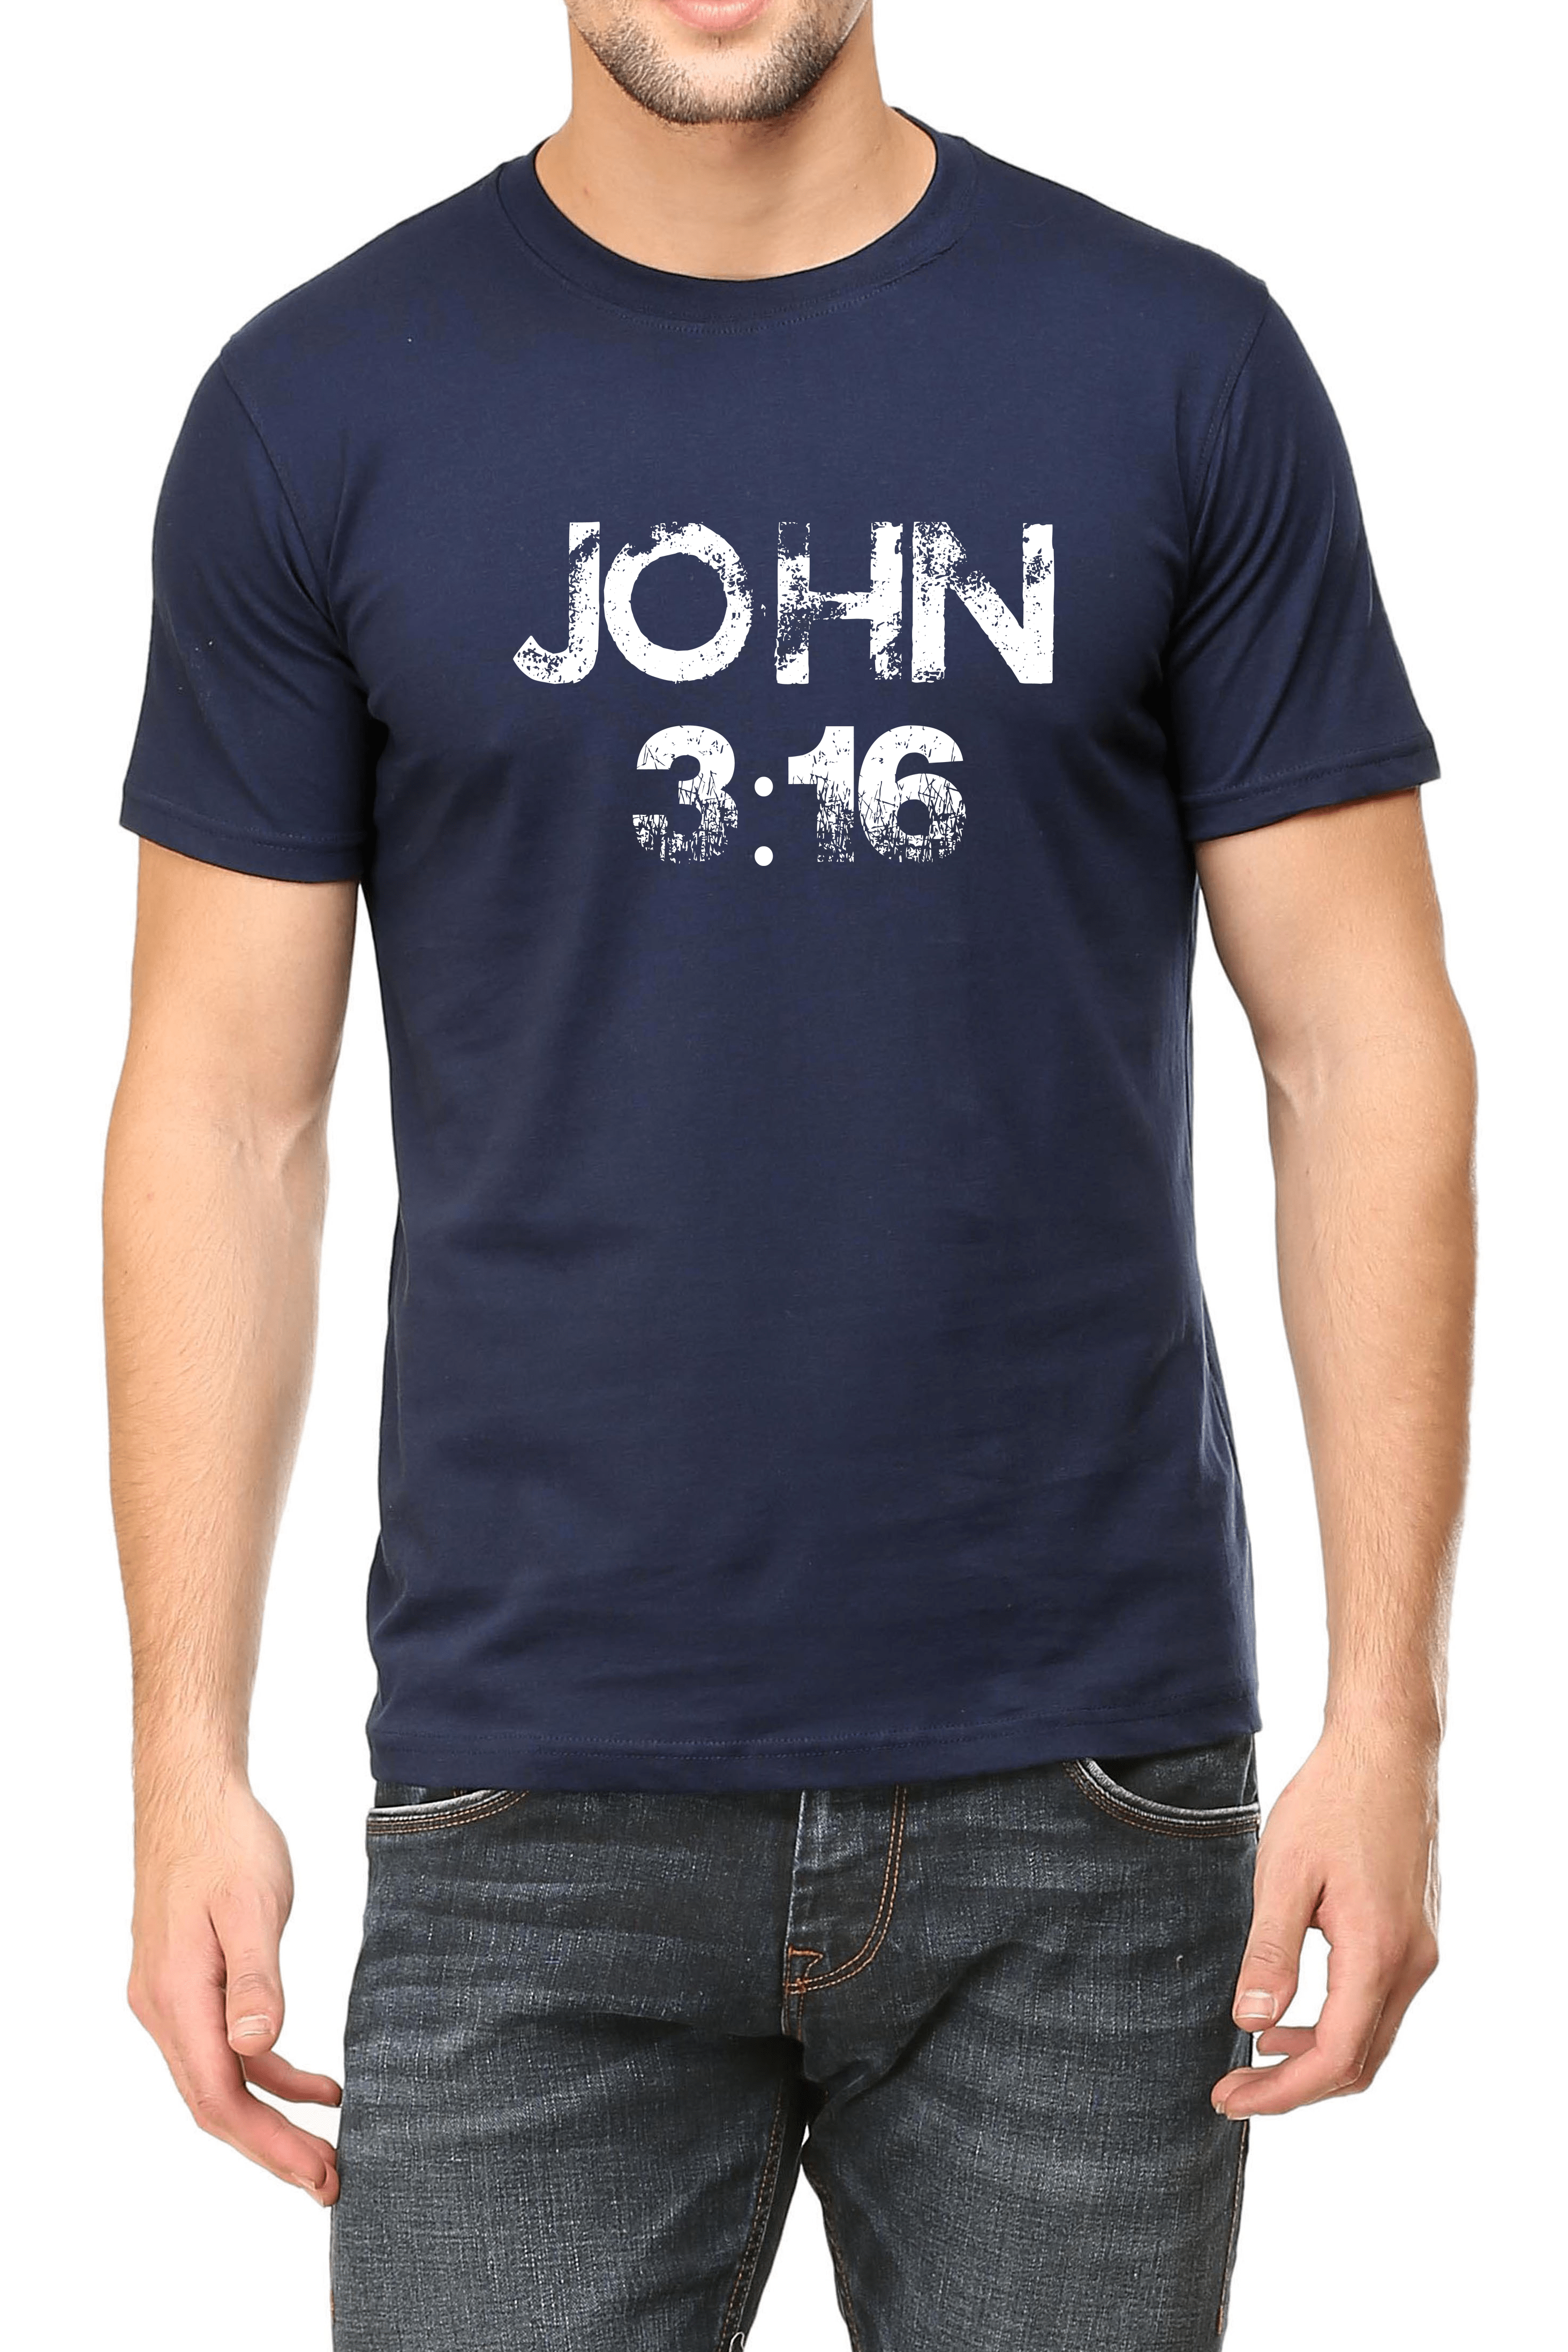 Living Words Men Round Neck T Shirt S / Navy Blue John 3 16 - Christian T-Shirt